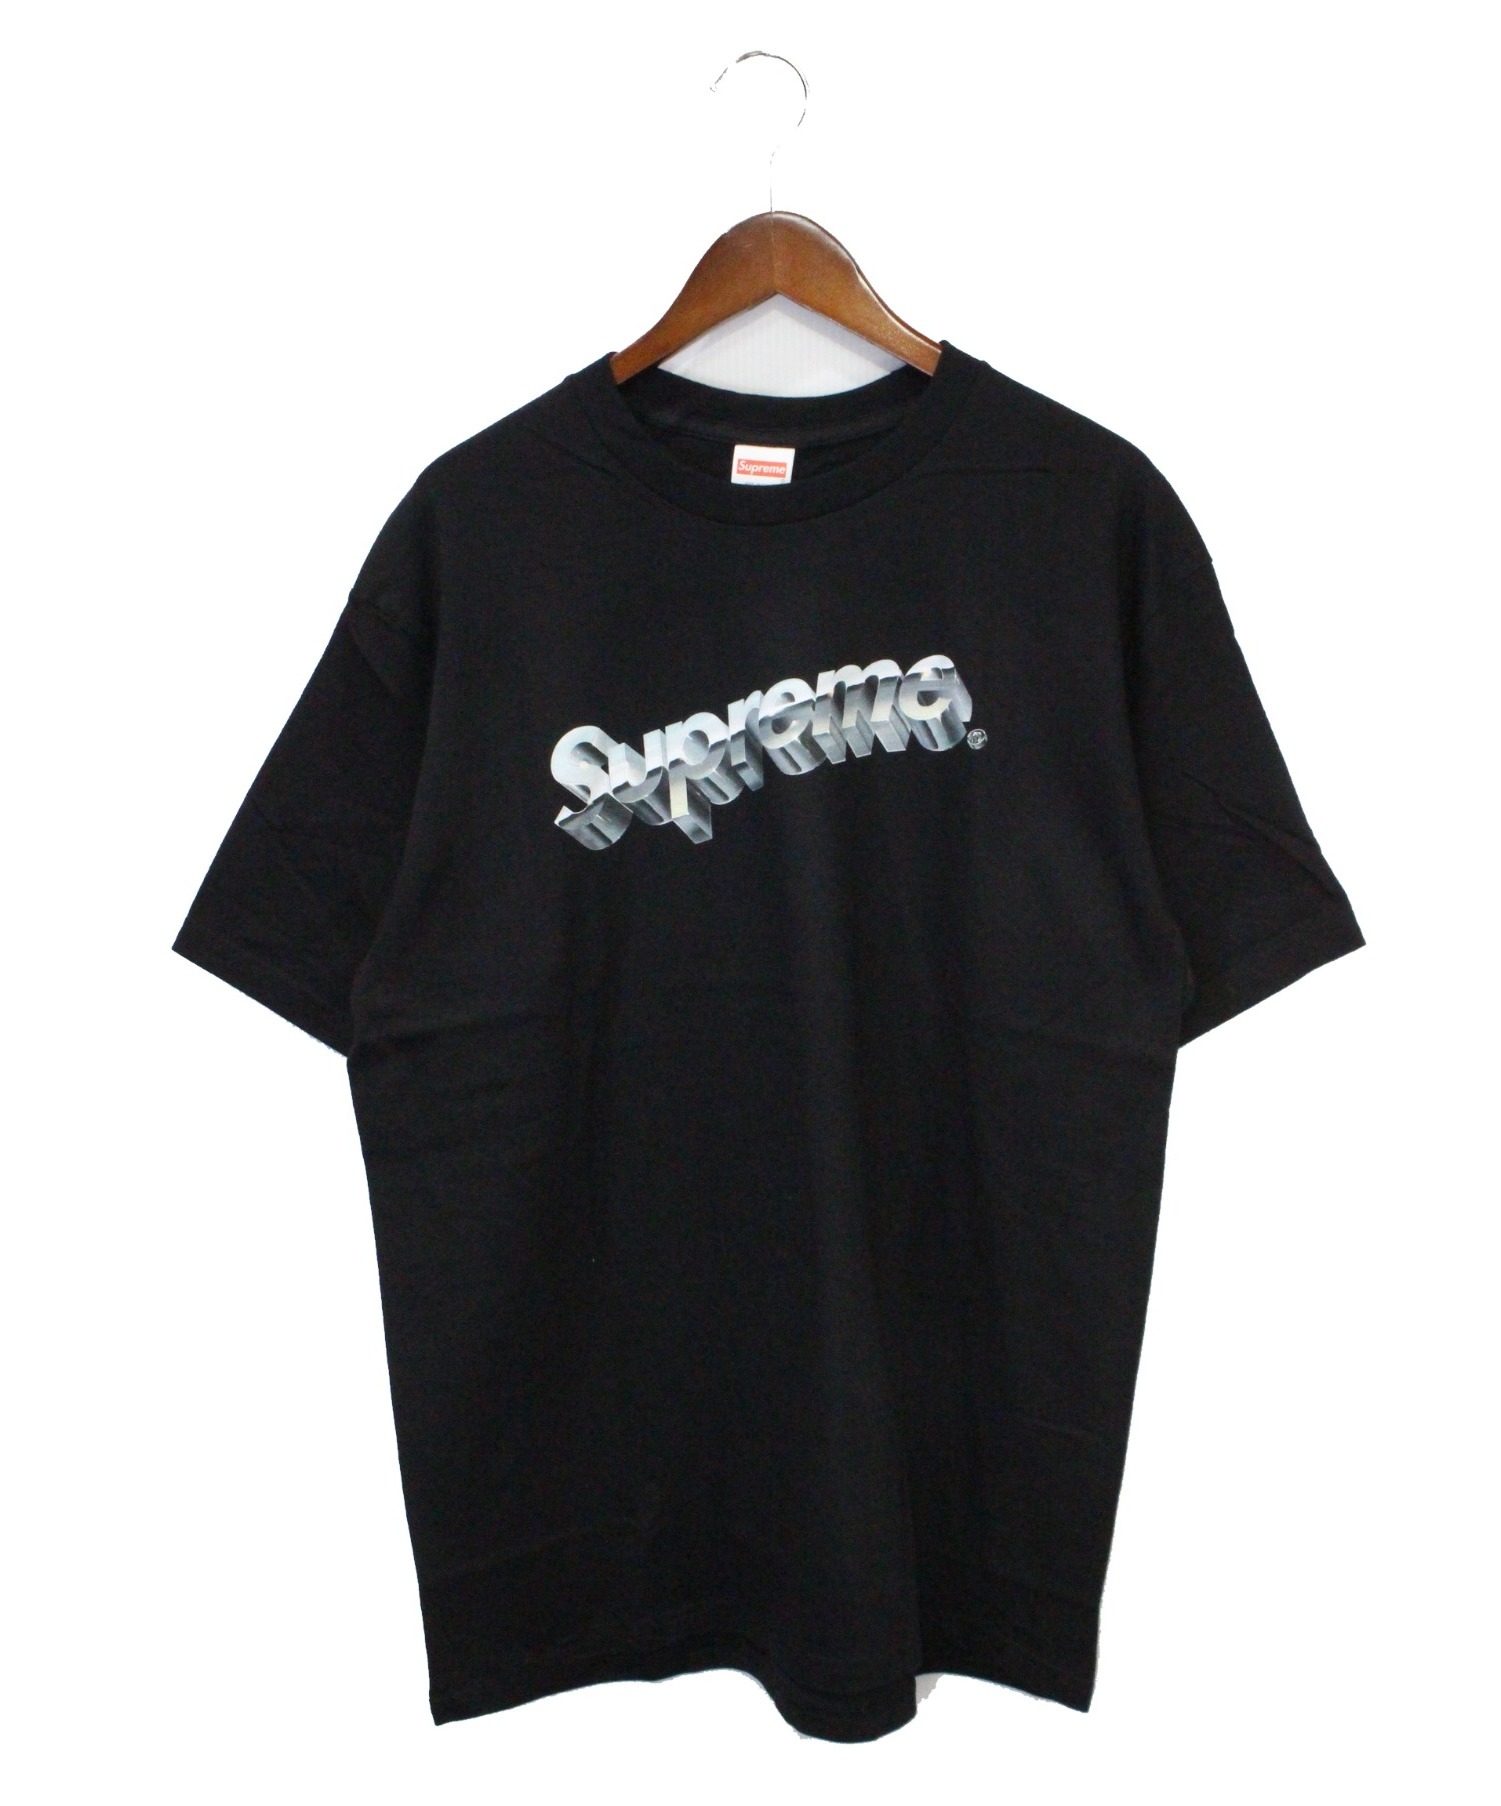 Supreme (シュプリーム) 20SS chrome logo tee ブラック サイズ:Ｌ